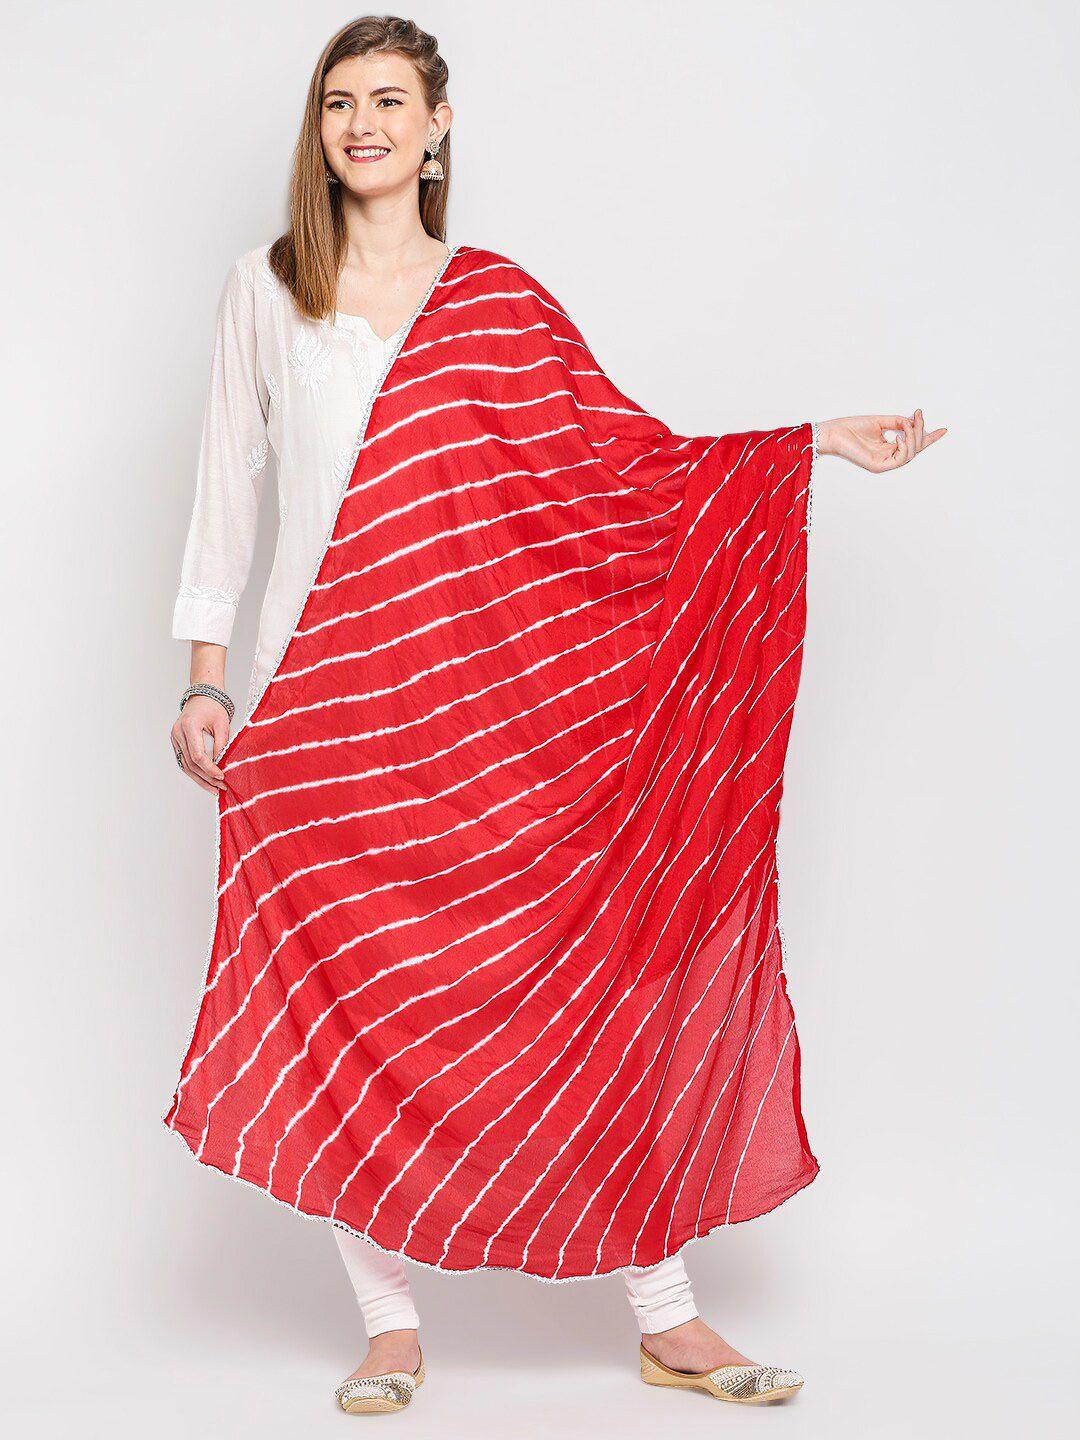 dupatta-bazaar-red-&-white-striped-leheriya-tie-and-dye-dupatta